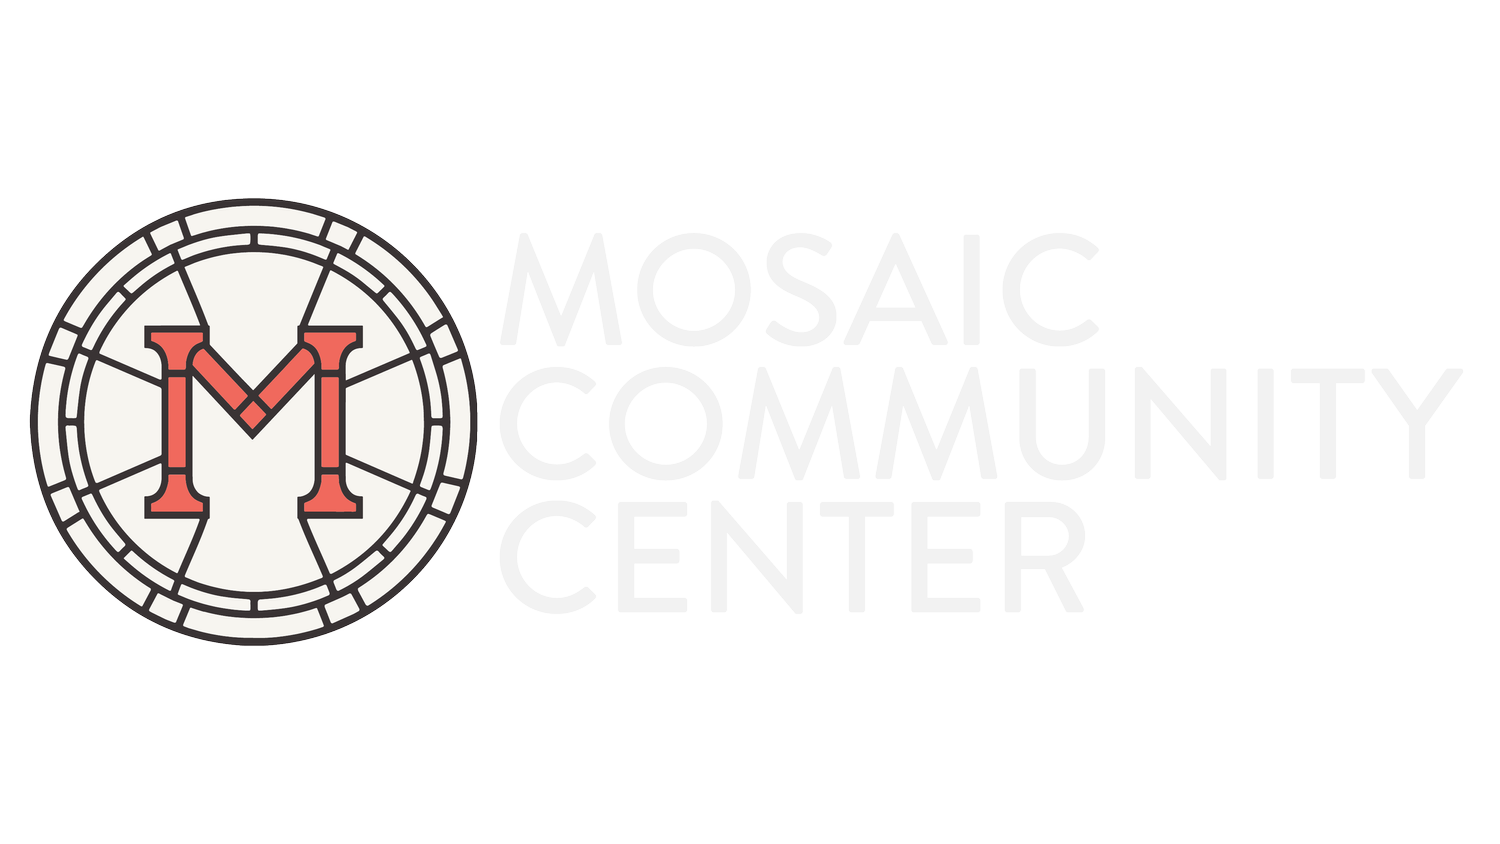 Mosaic Community Center